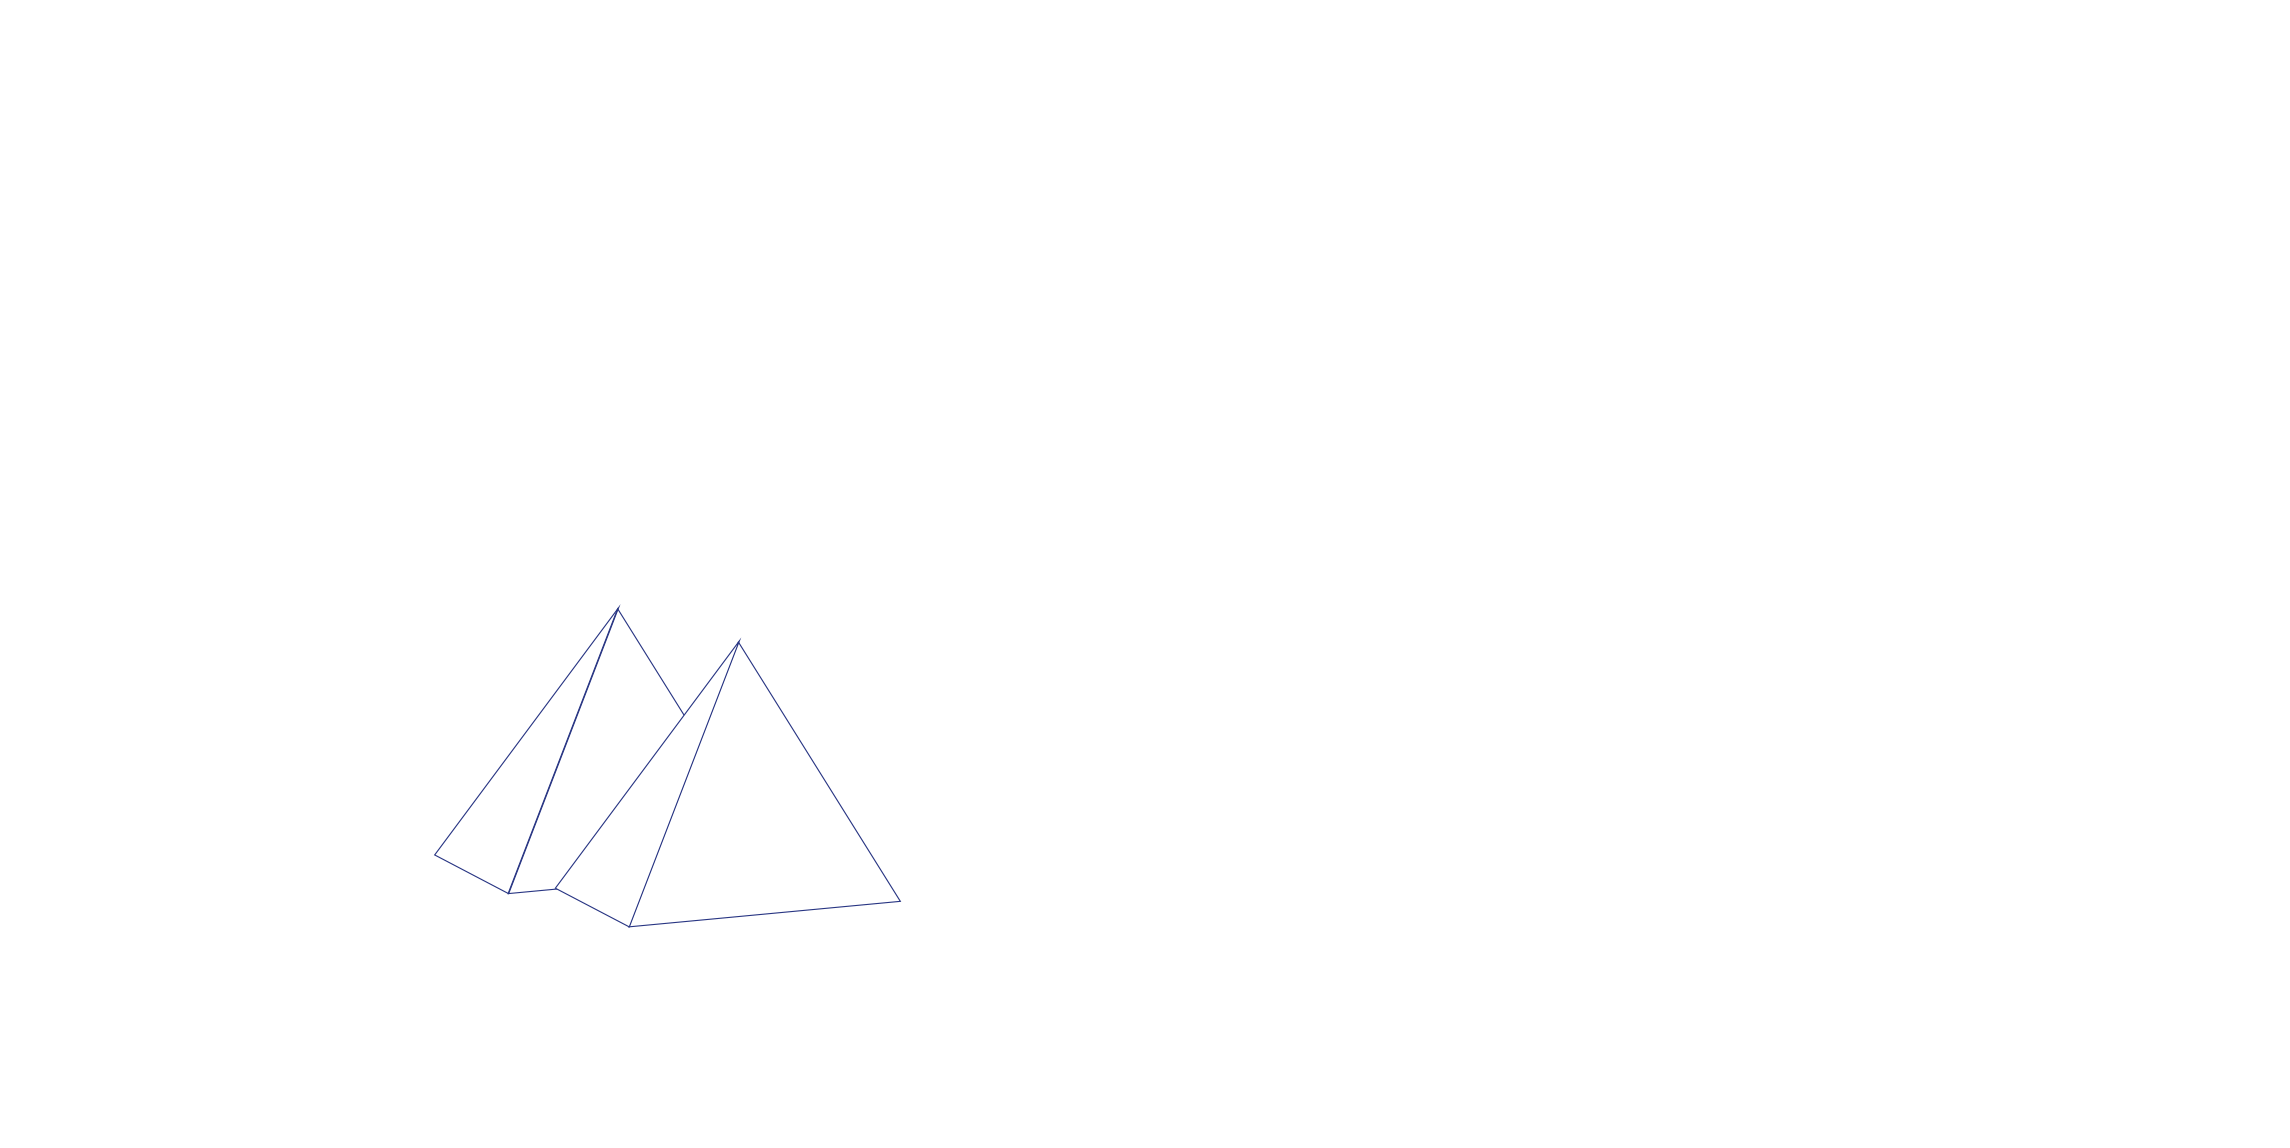 Município de Rio Maior